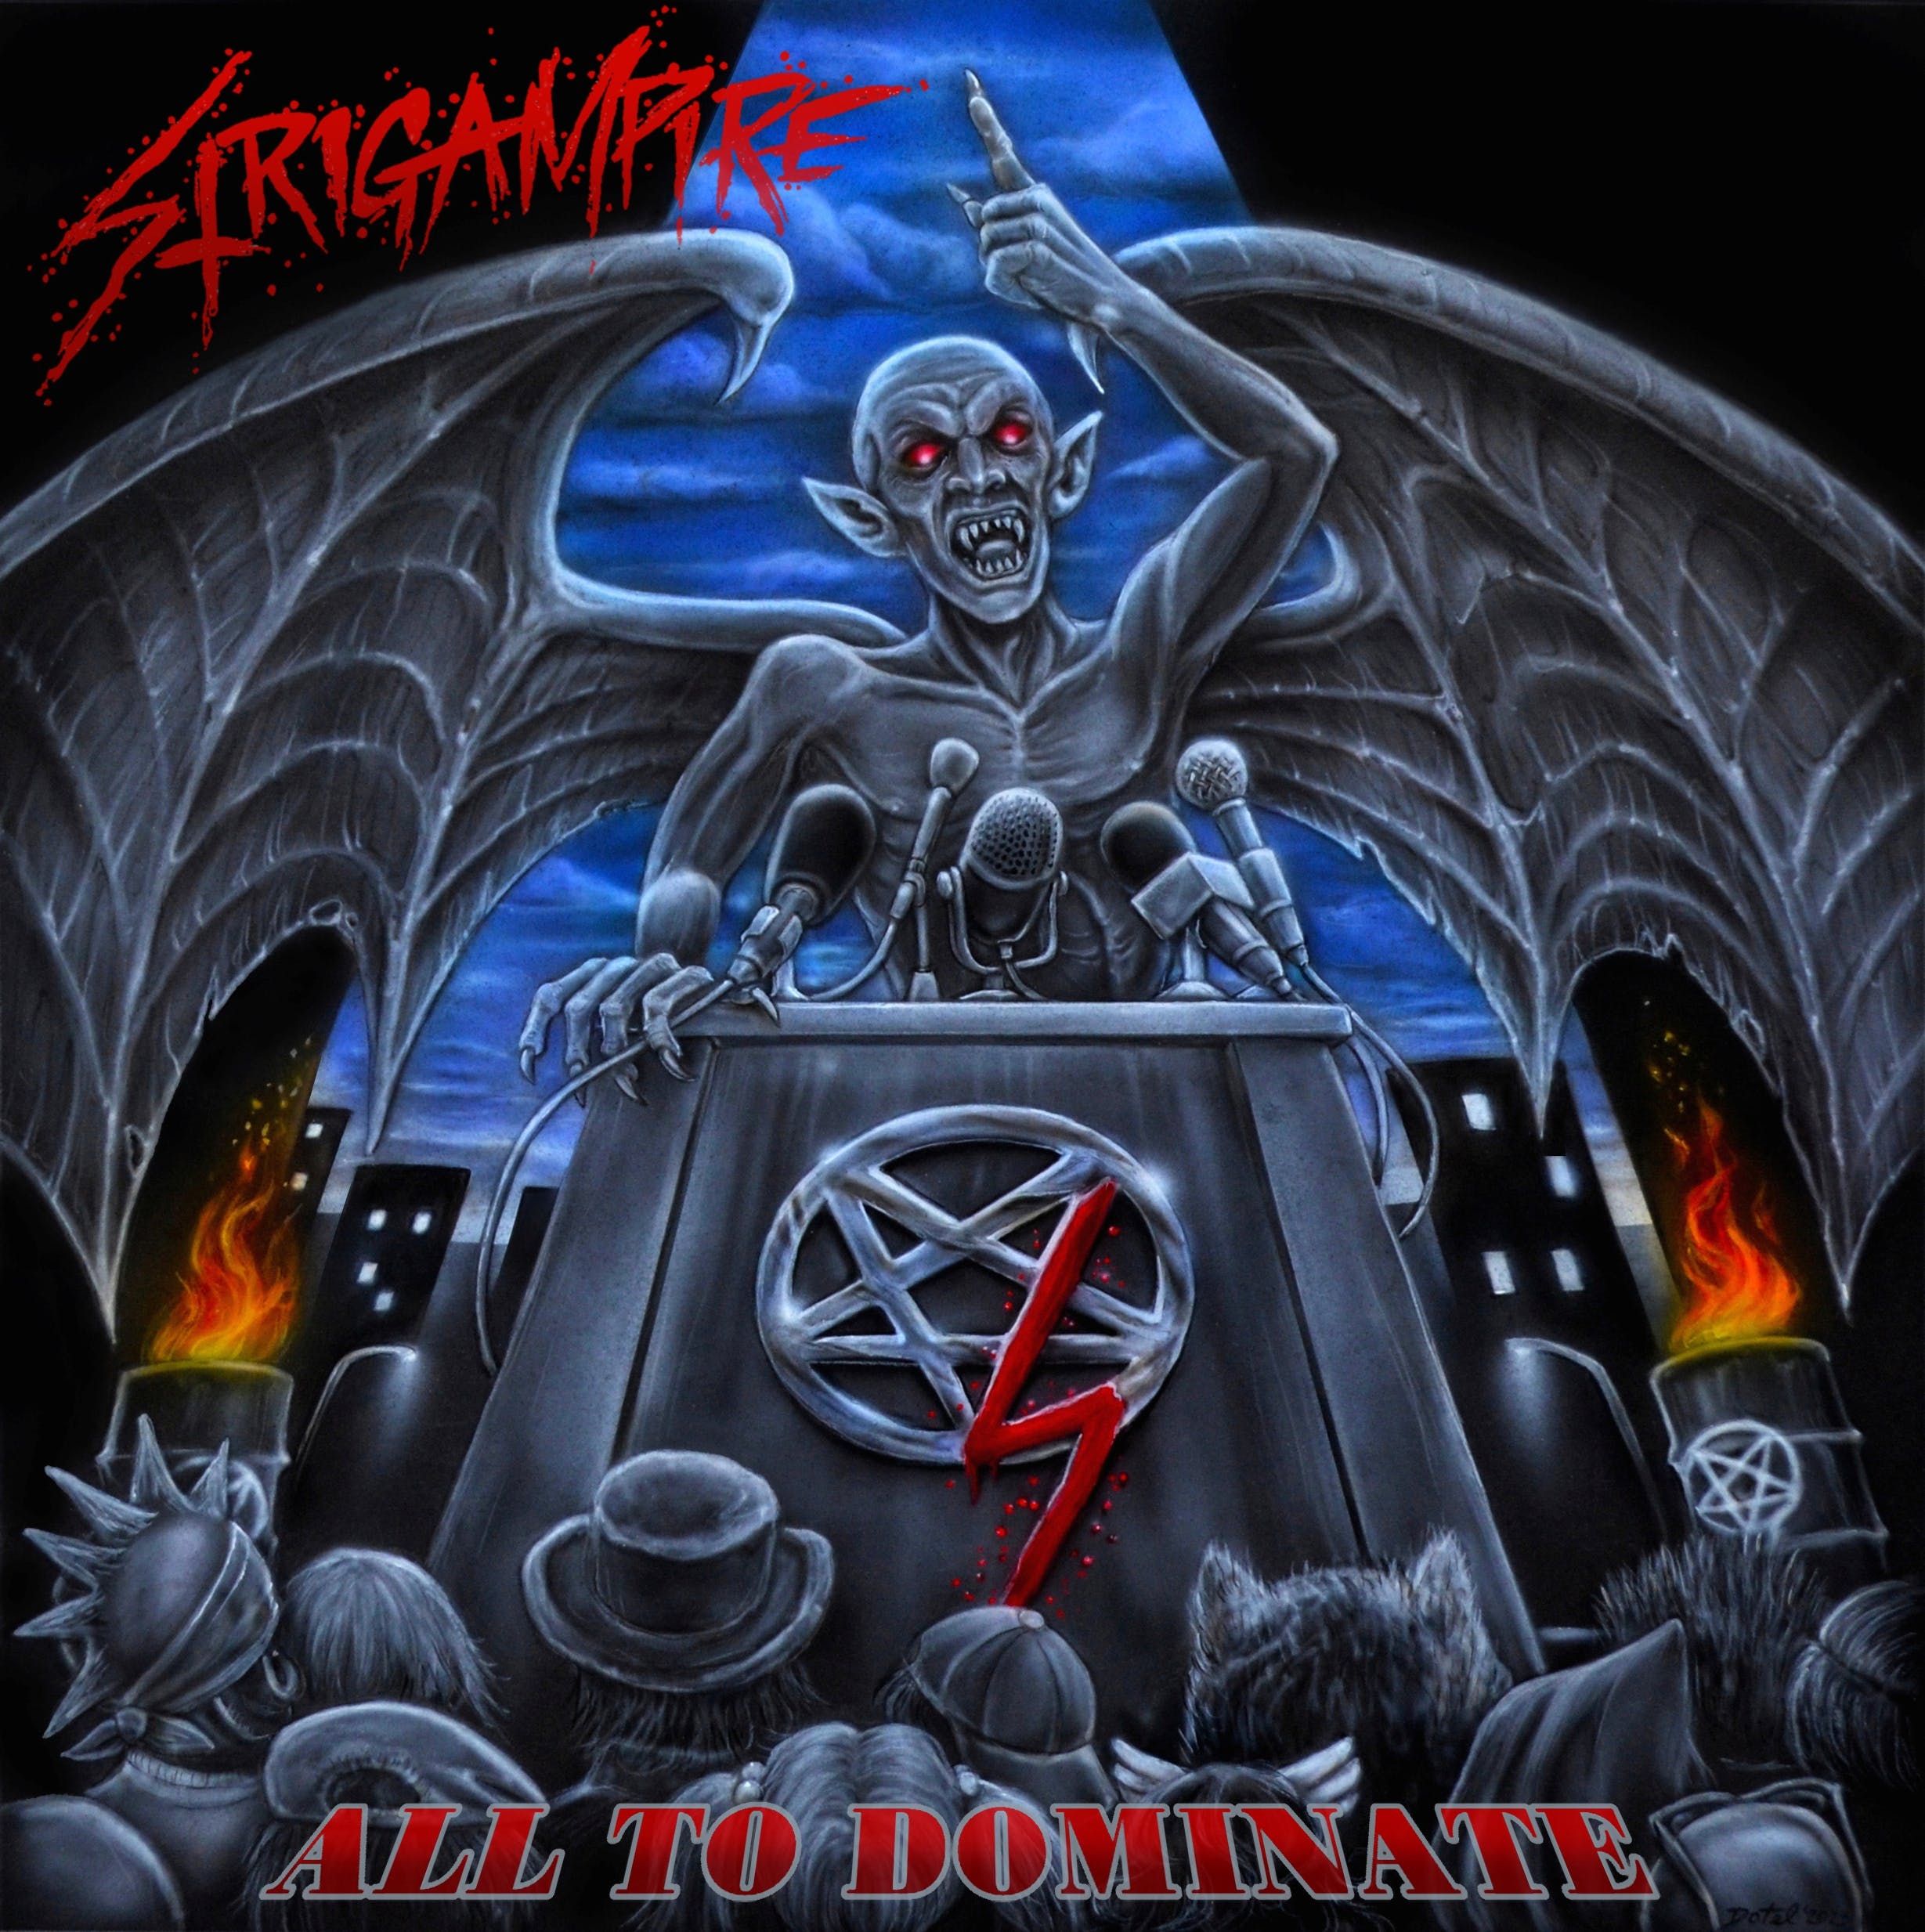 STRIGAMPIRE anuncia nuevo álbum, “All To Dominate”